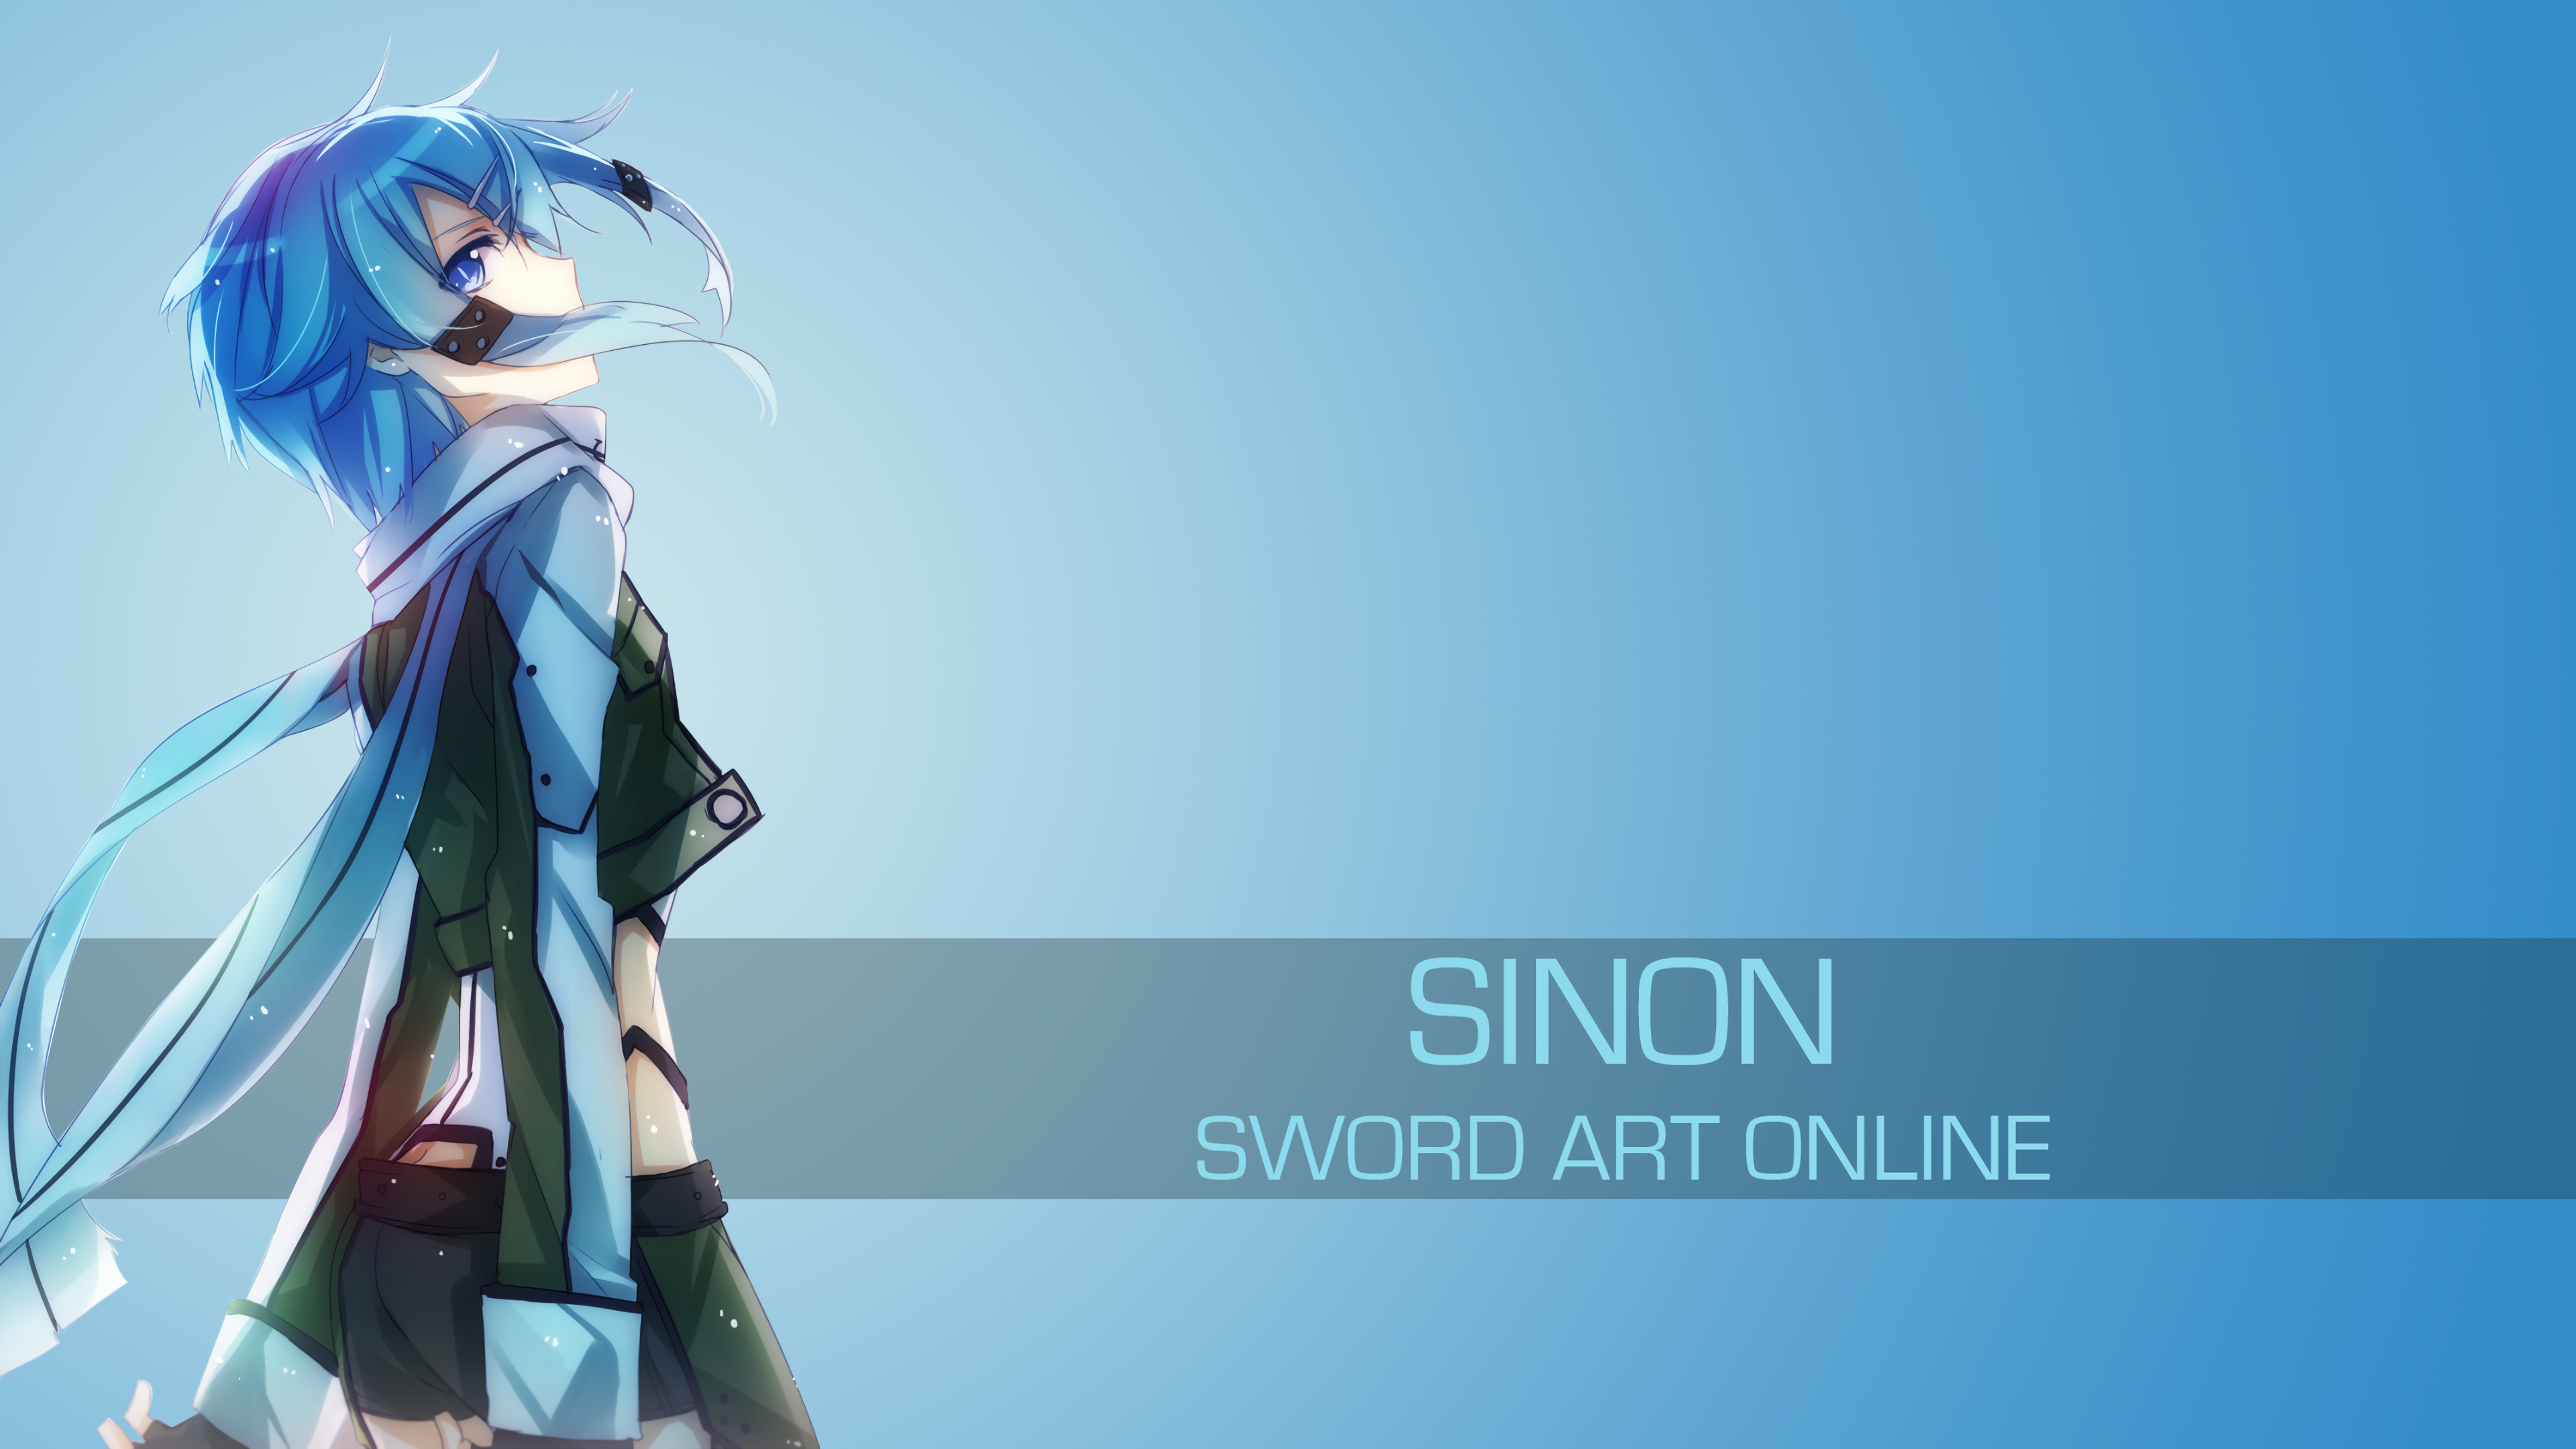 Sword Art Online-Sinon 1 by spectralfire234 on DeviantArt